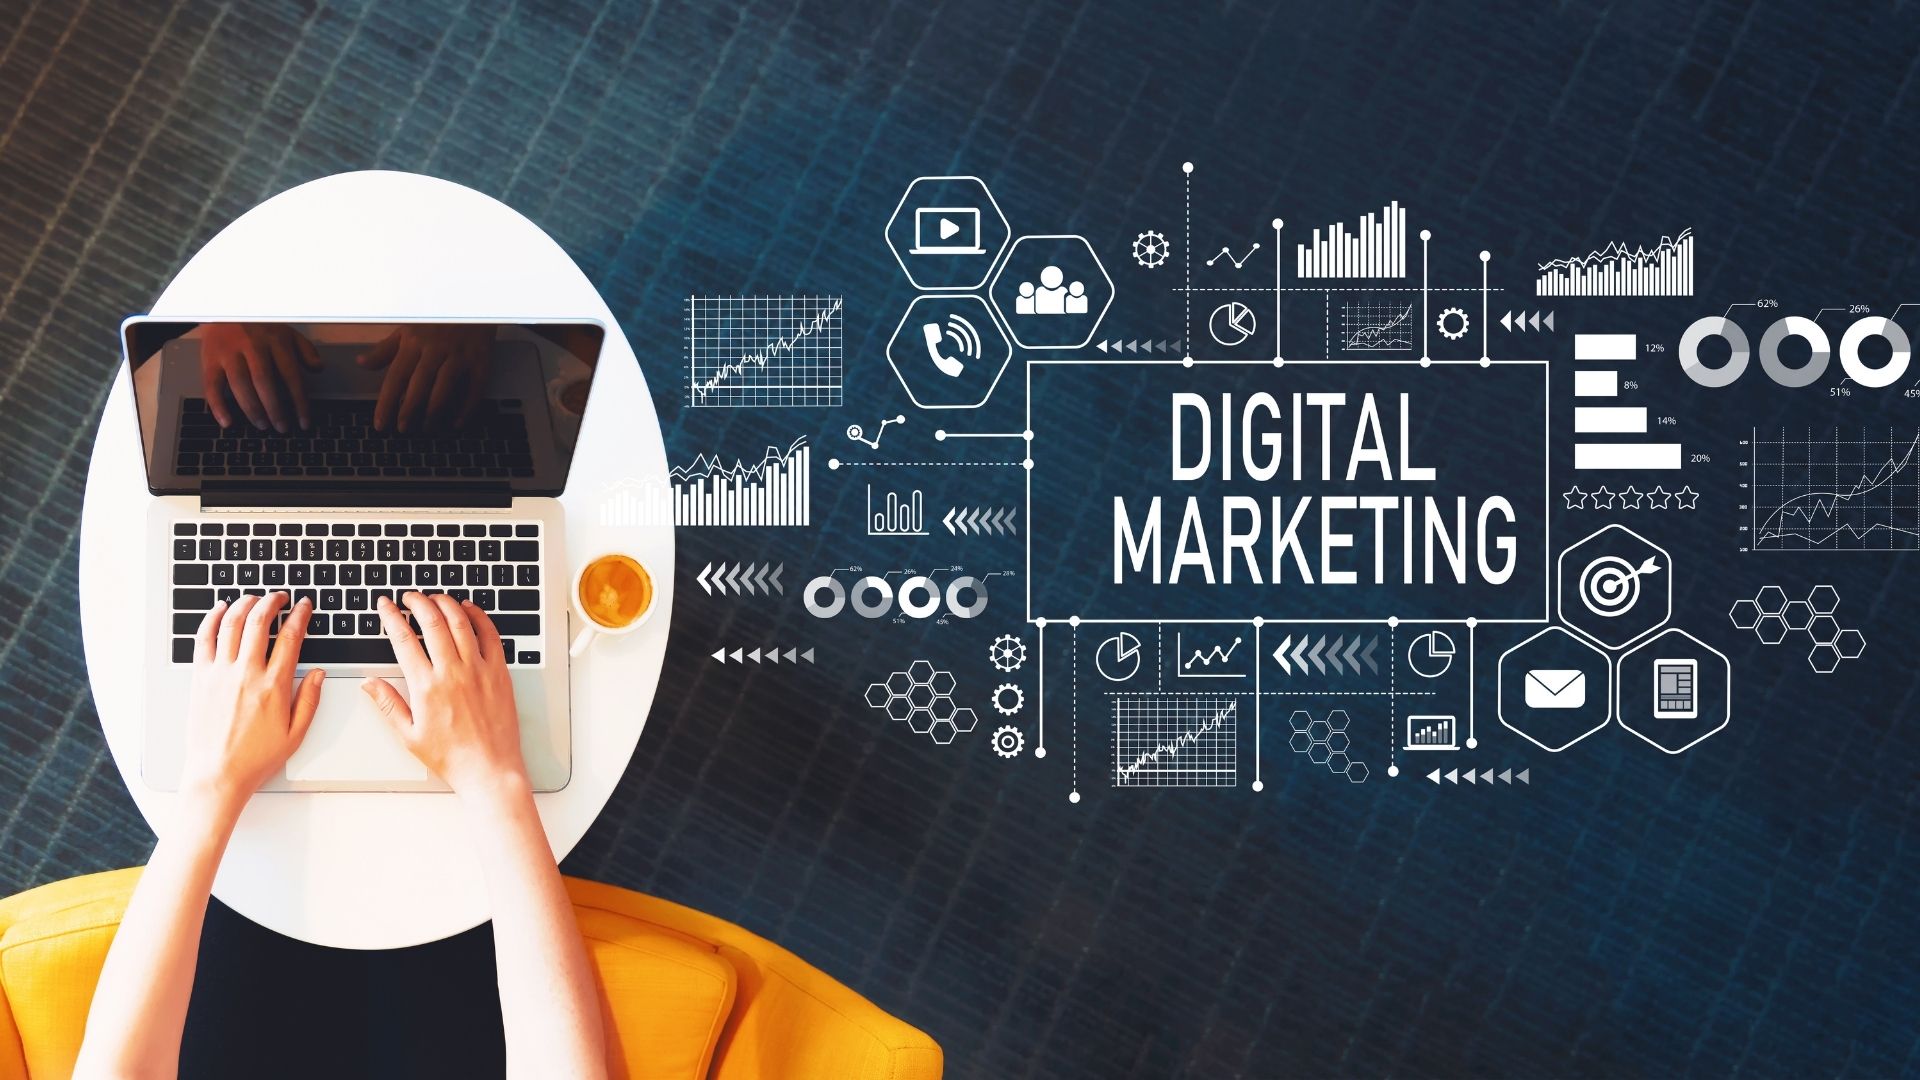 Digitalizzazione-incentivi-per-i-progetti-di-Digital-Marketing.jpg